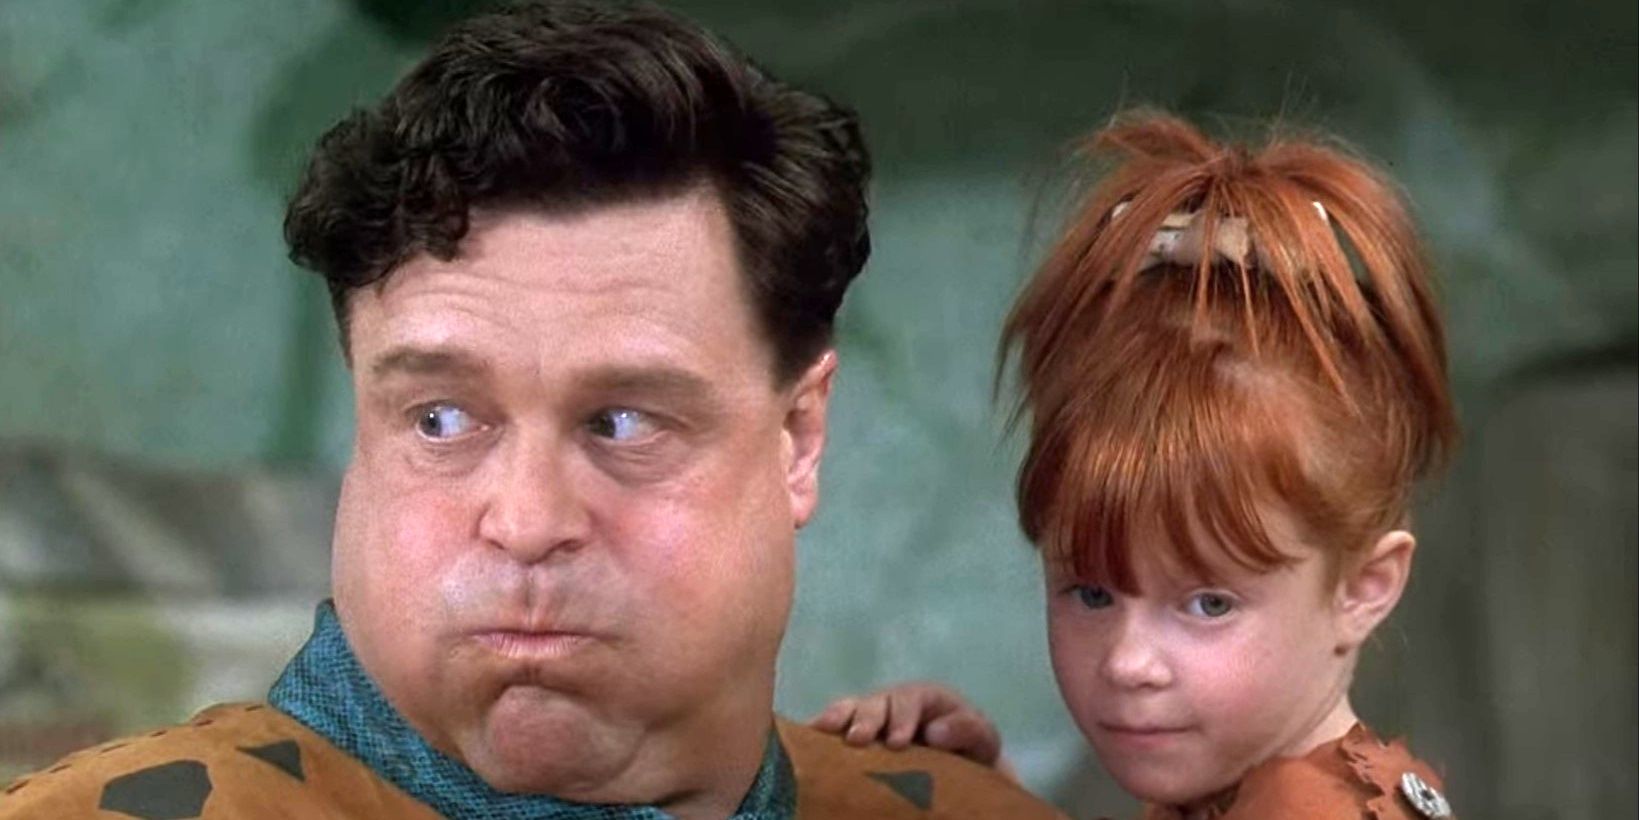 John Goodman as Fred Flintstone holding his daughter Pebbles in The Flintstones.